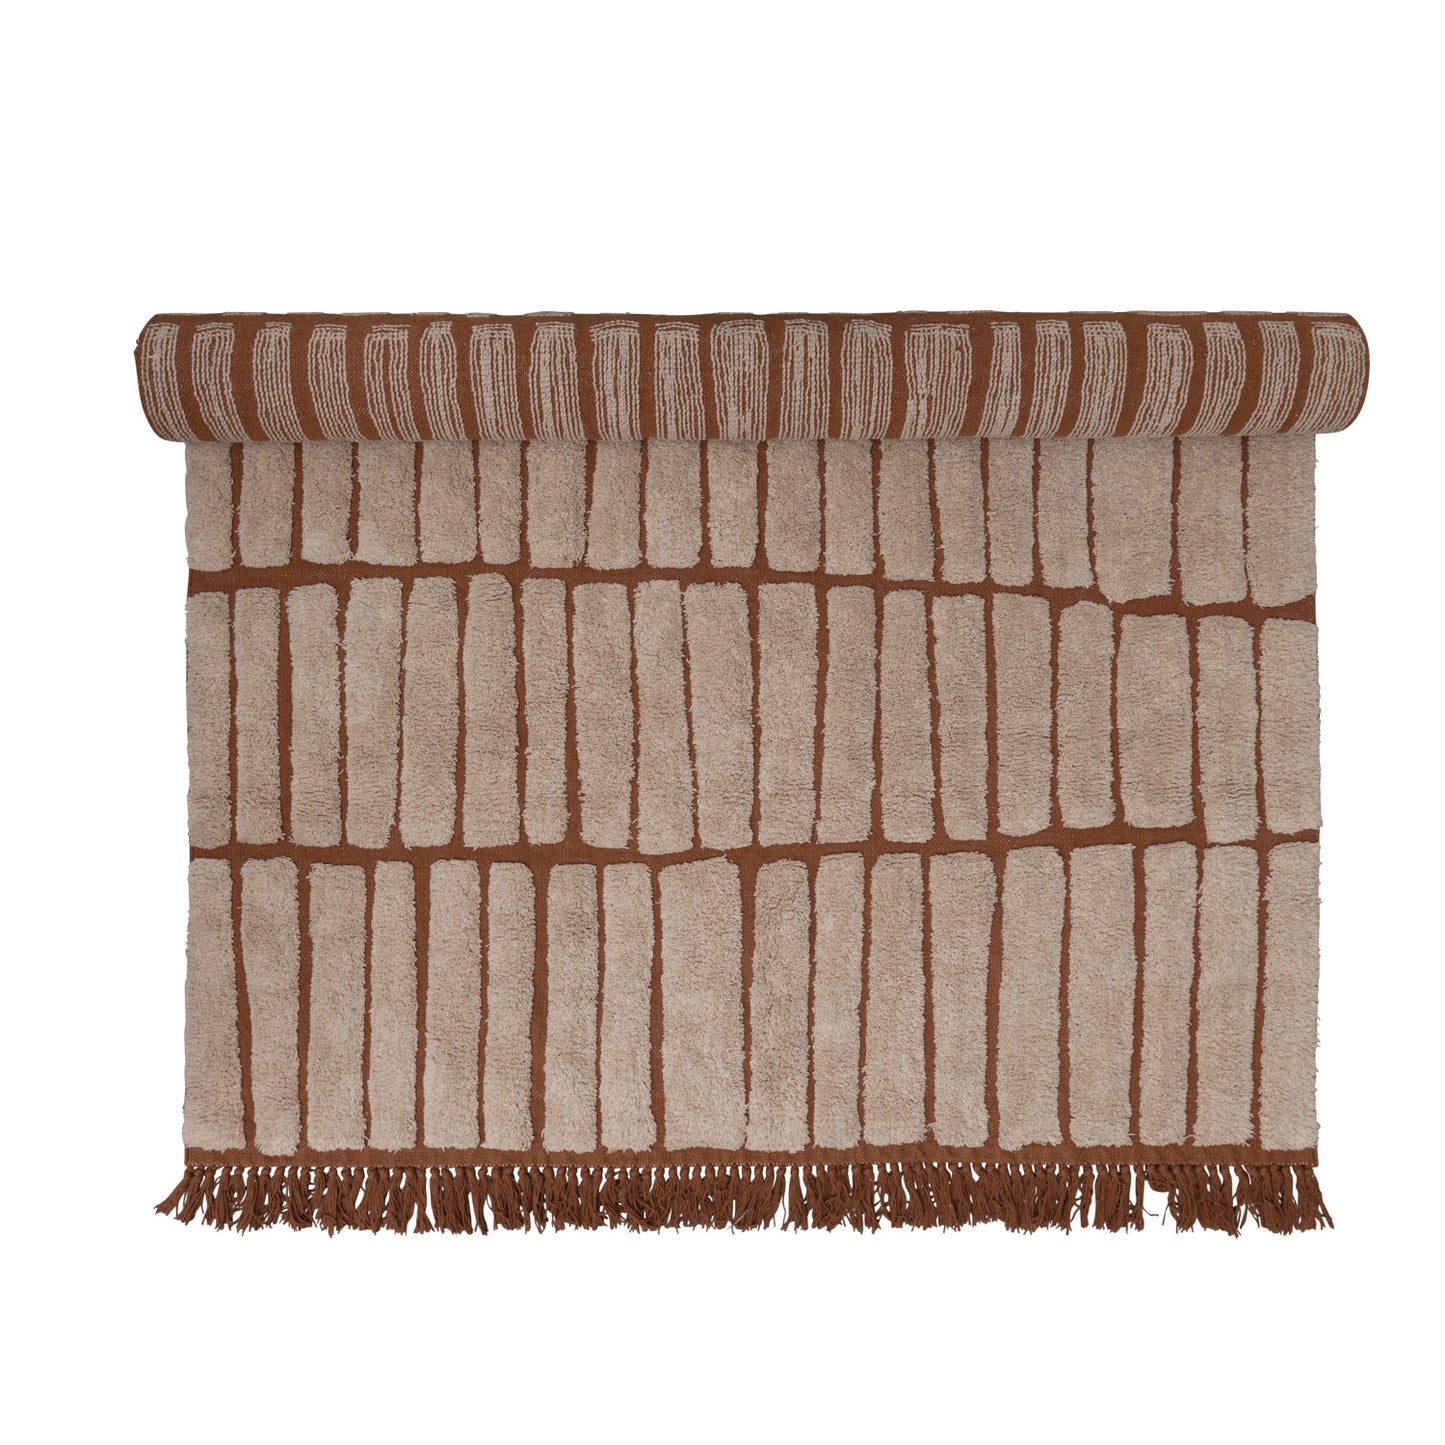 5' x 8' Cotton Tufted Rug w/ Block Design & Fringe, Sienna & Cream Color